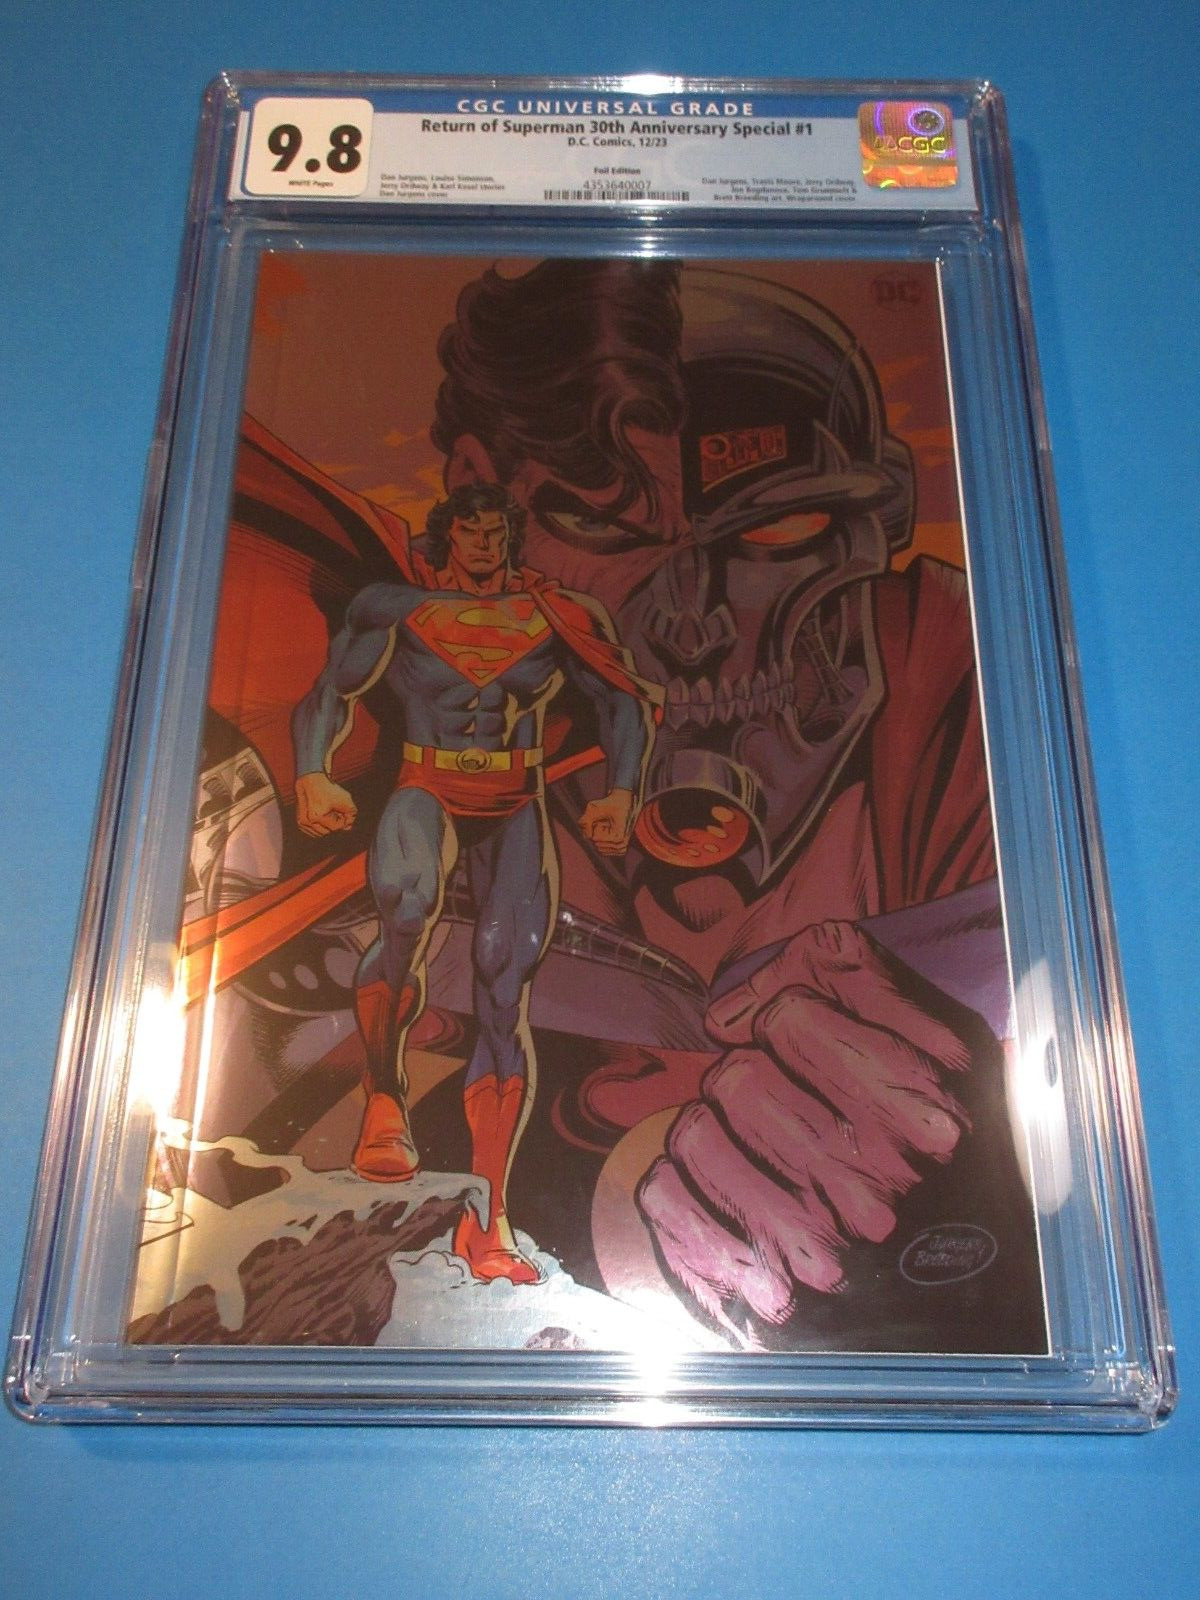 Return of Superman 30th Anniversary #1 Foil Variant CGC 9.8 NM/M Gem Wow